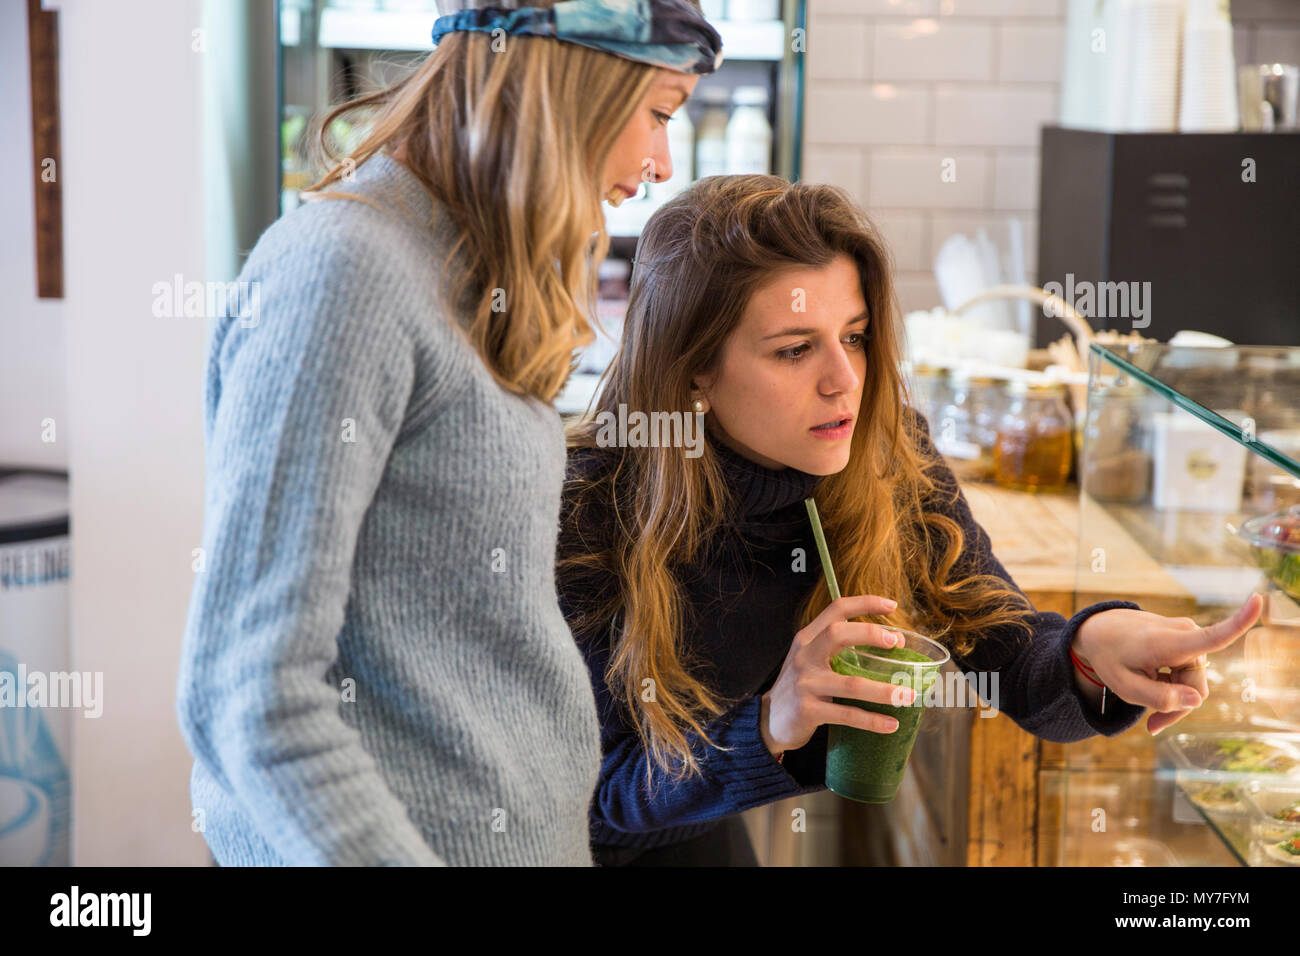 Joven y amigo buscando alimentos frescos vitrina en cafe Foto de stock